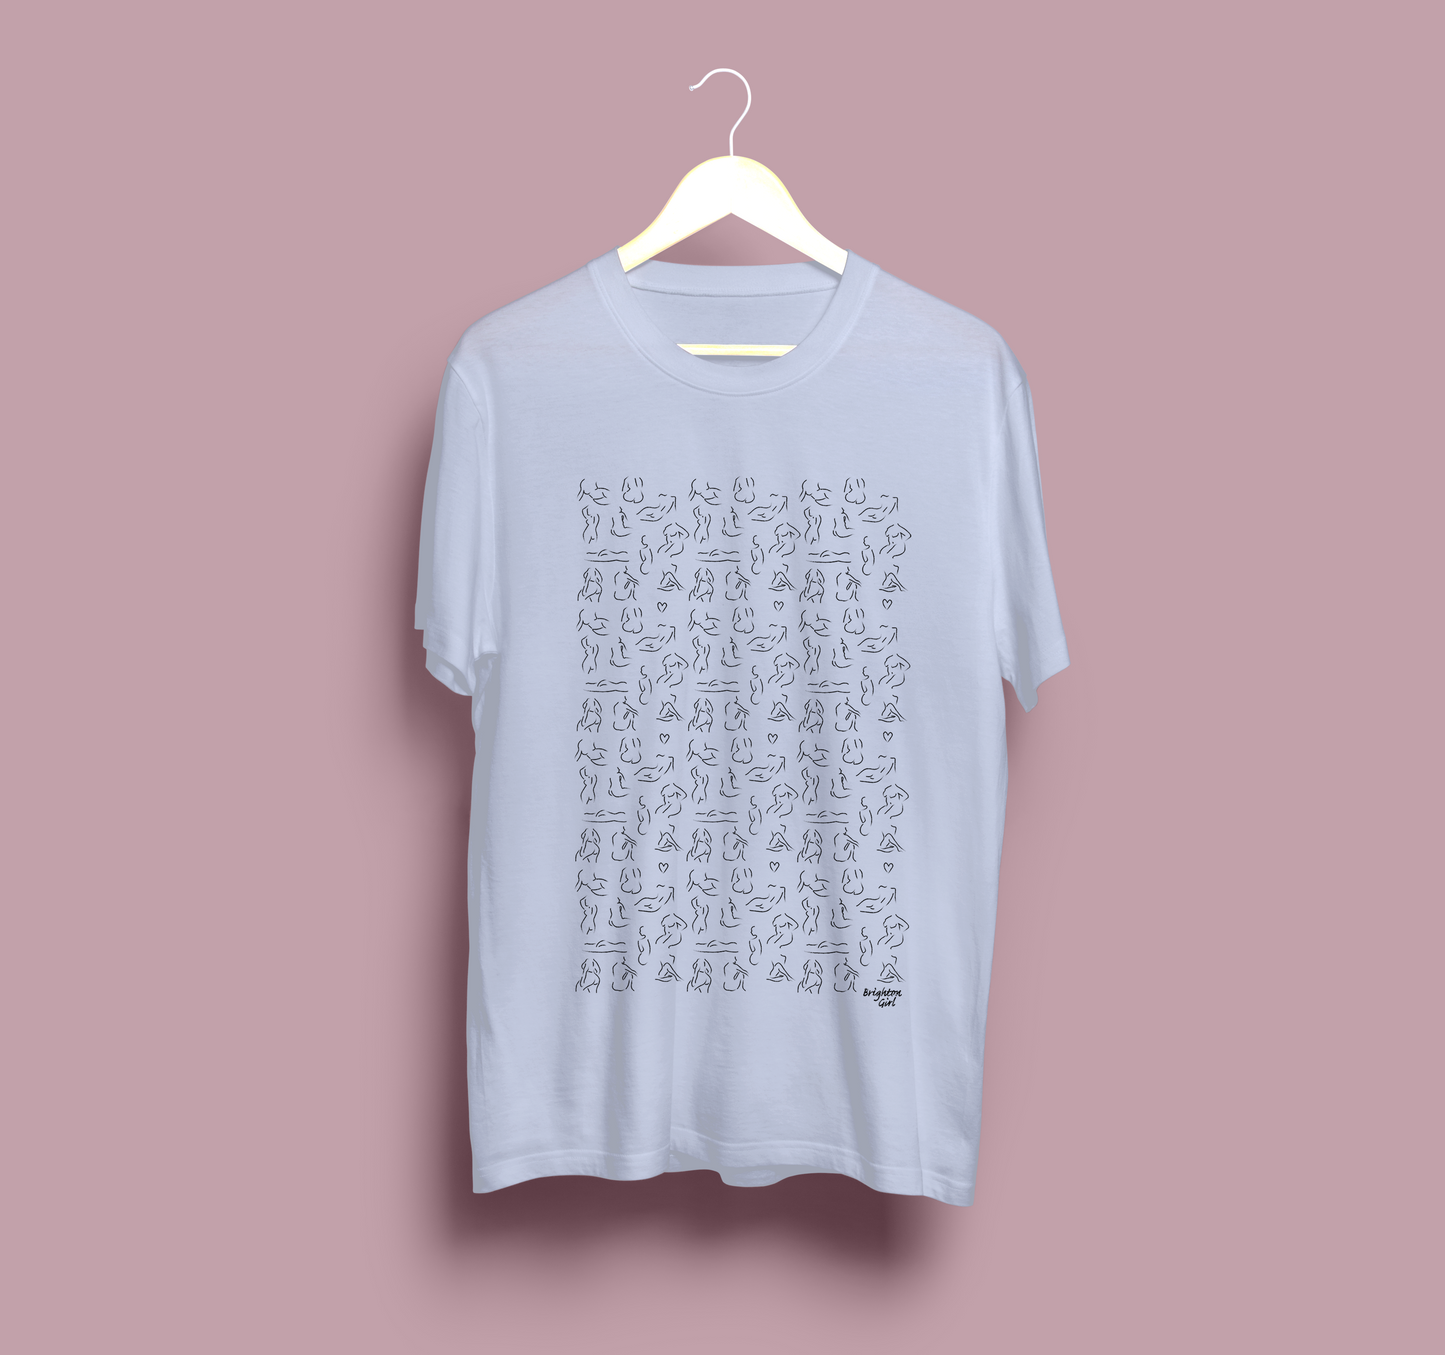 Brighton Girl Teeshirt - Ella Hunter design (Kids Size)